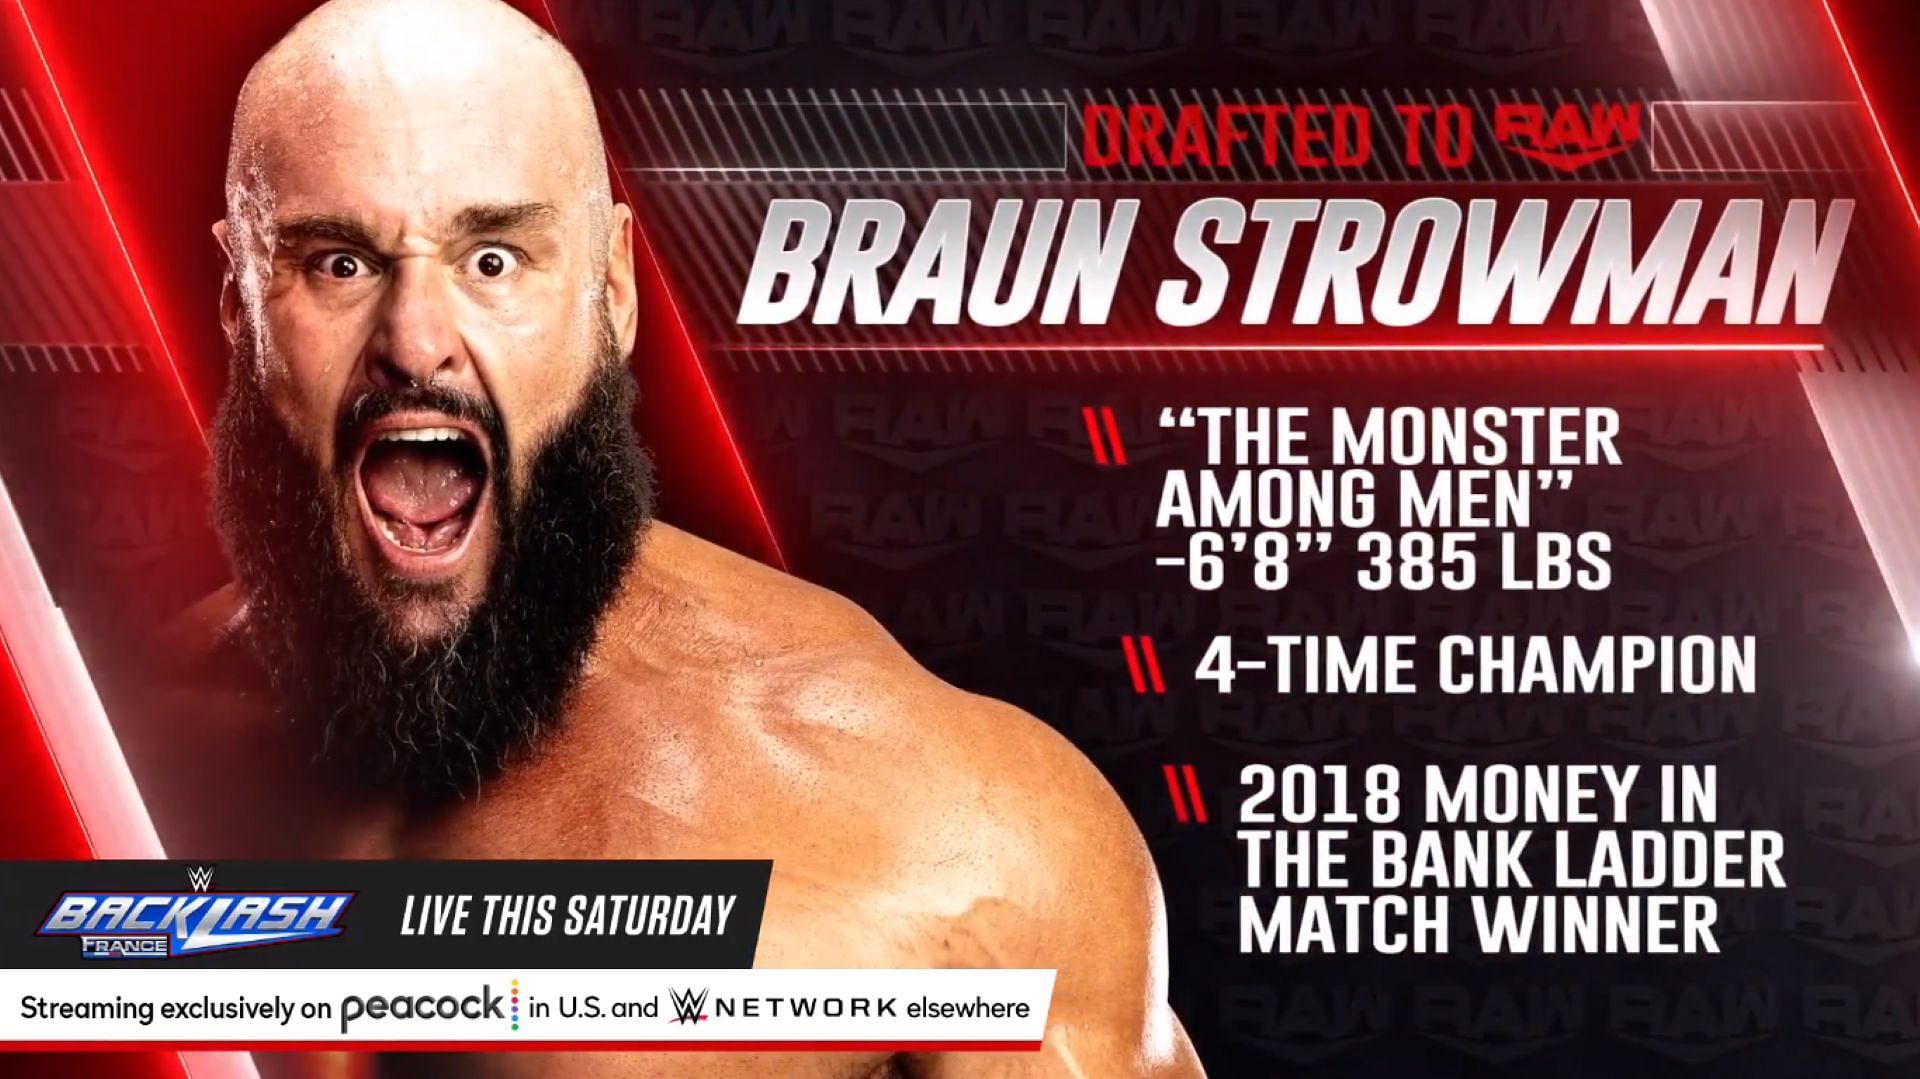 Braun Strowman is back for more mayhem!